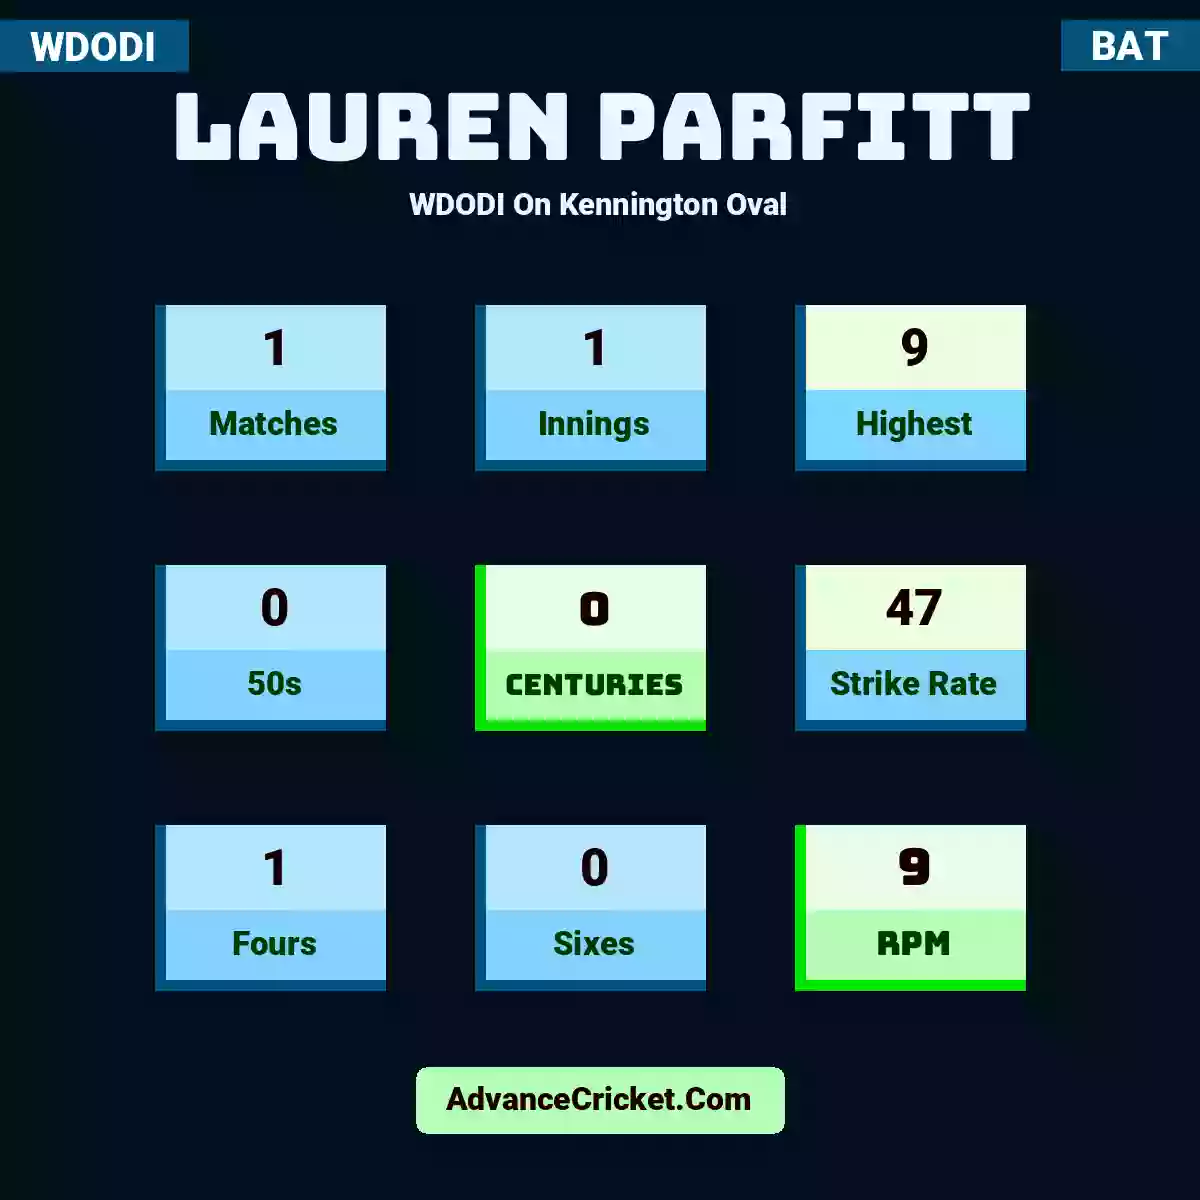 Lauren Parfitt WDODI  On Kennington Oval, Lauren Parfitt played 1 matches, scored 9 runs as highest, 0 half-centuries, and 0 centuries, with a strike rate of 47. L.Parfitt hit 1 fours and 0 sixes, with an RPM of 9.